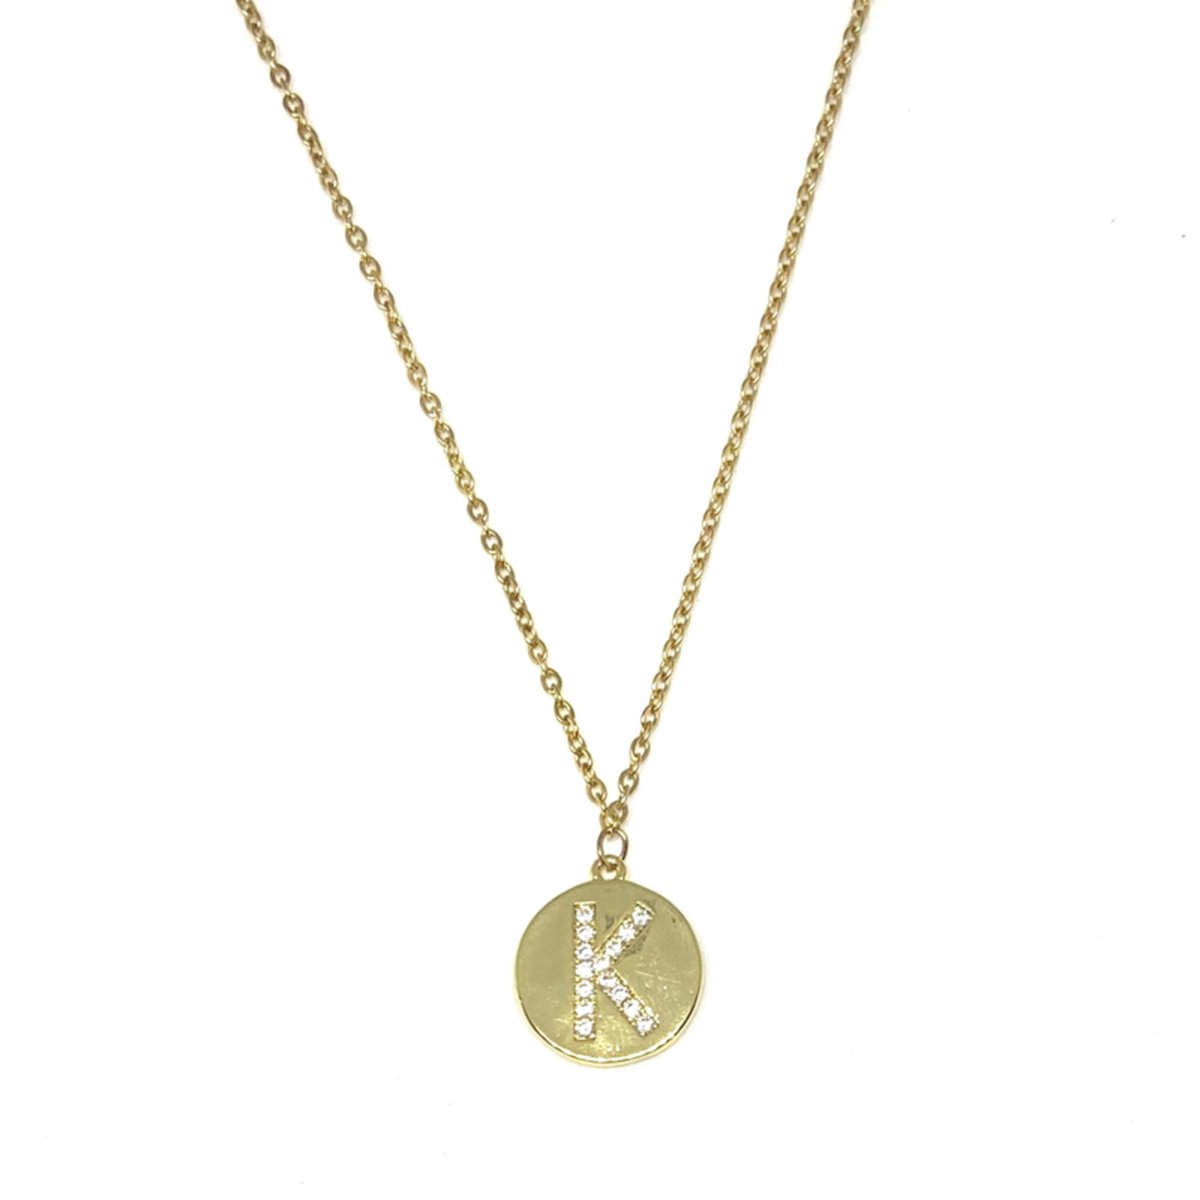 Letter ketting diamond coin - initiaal K - goud